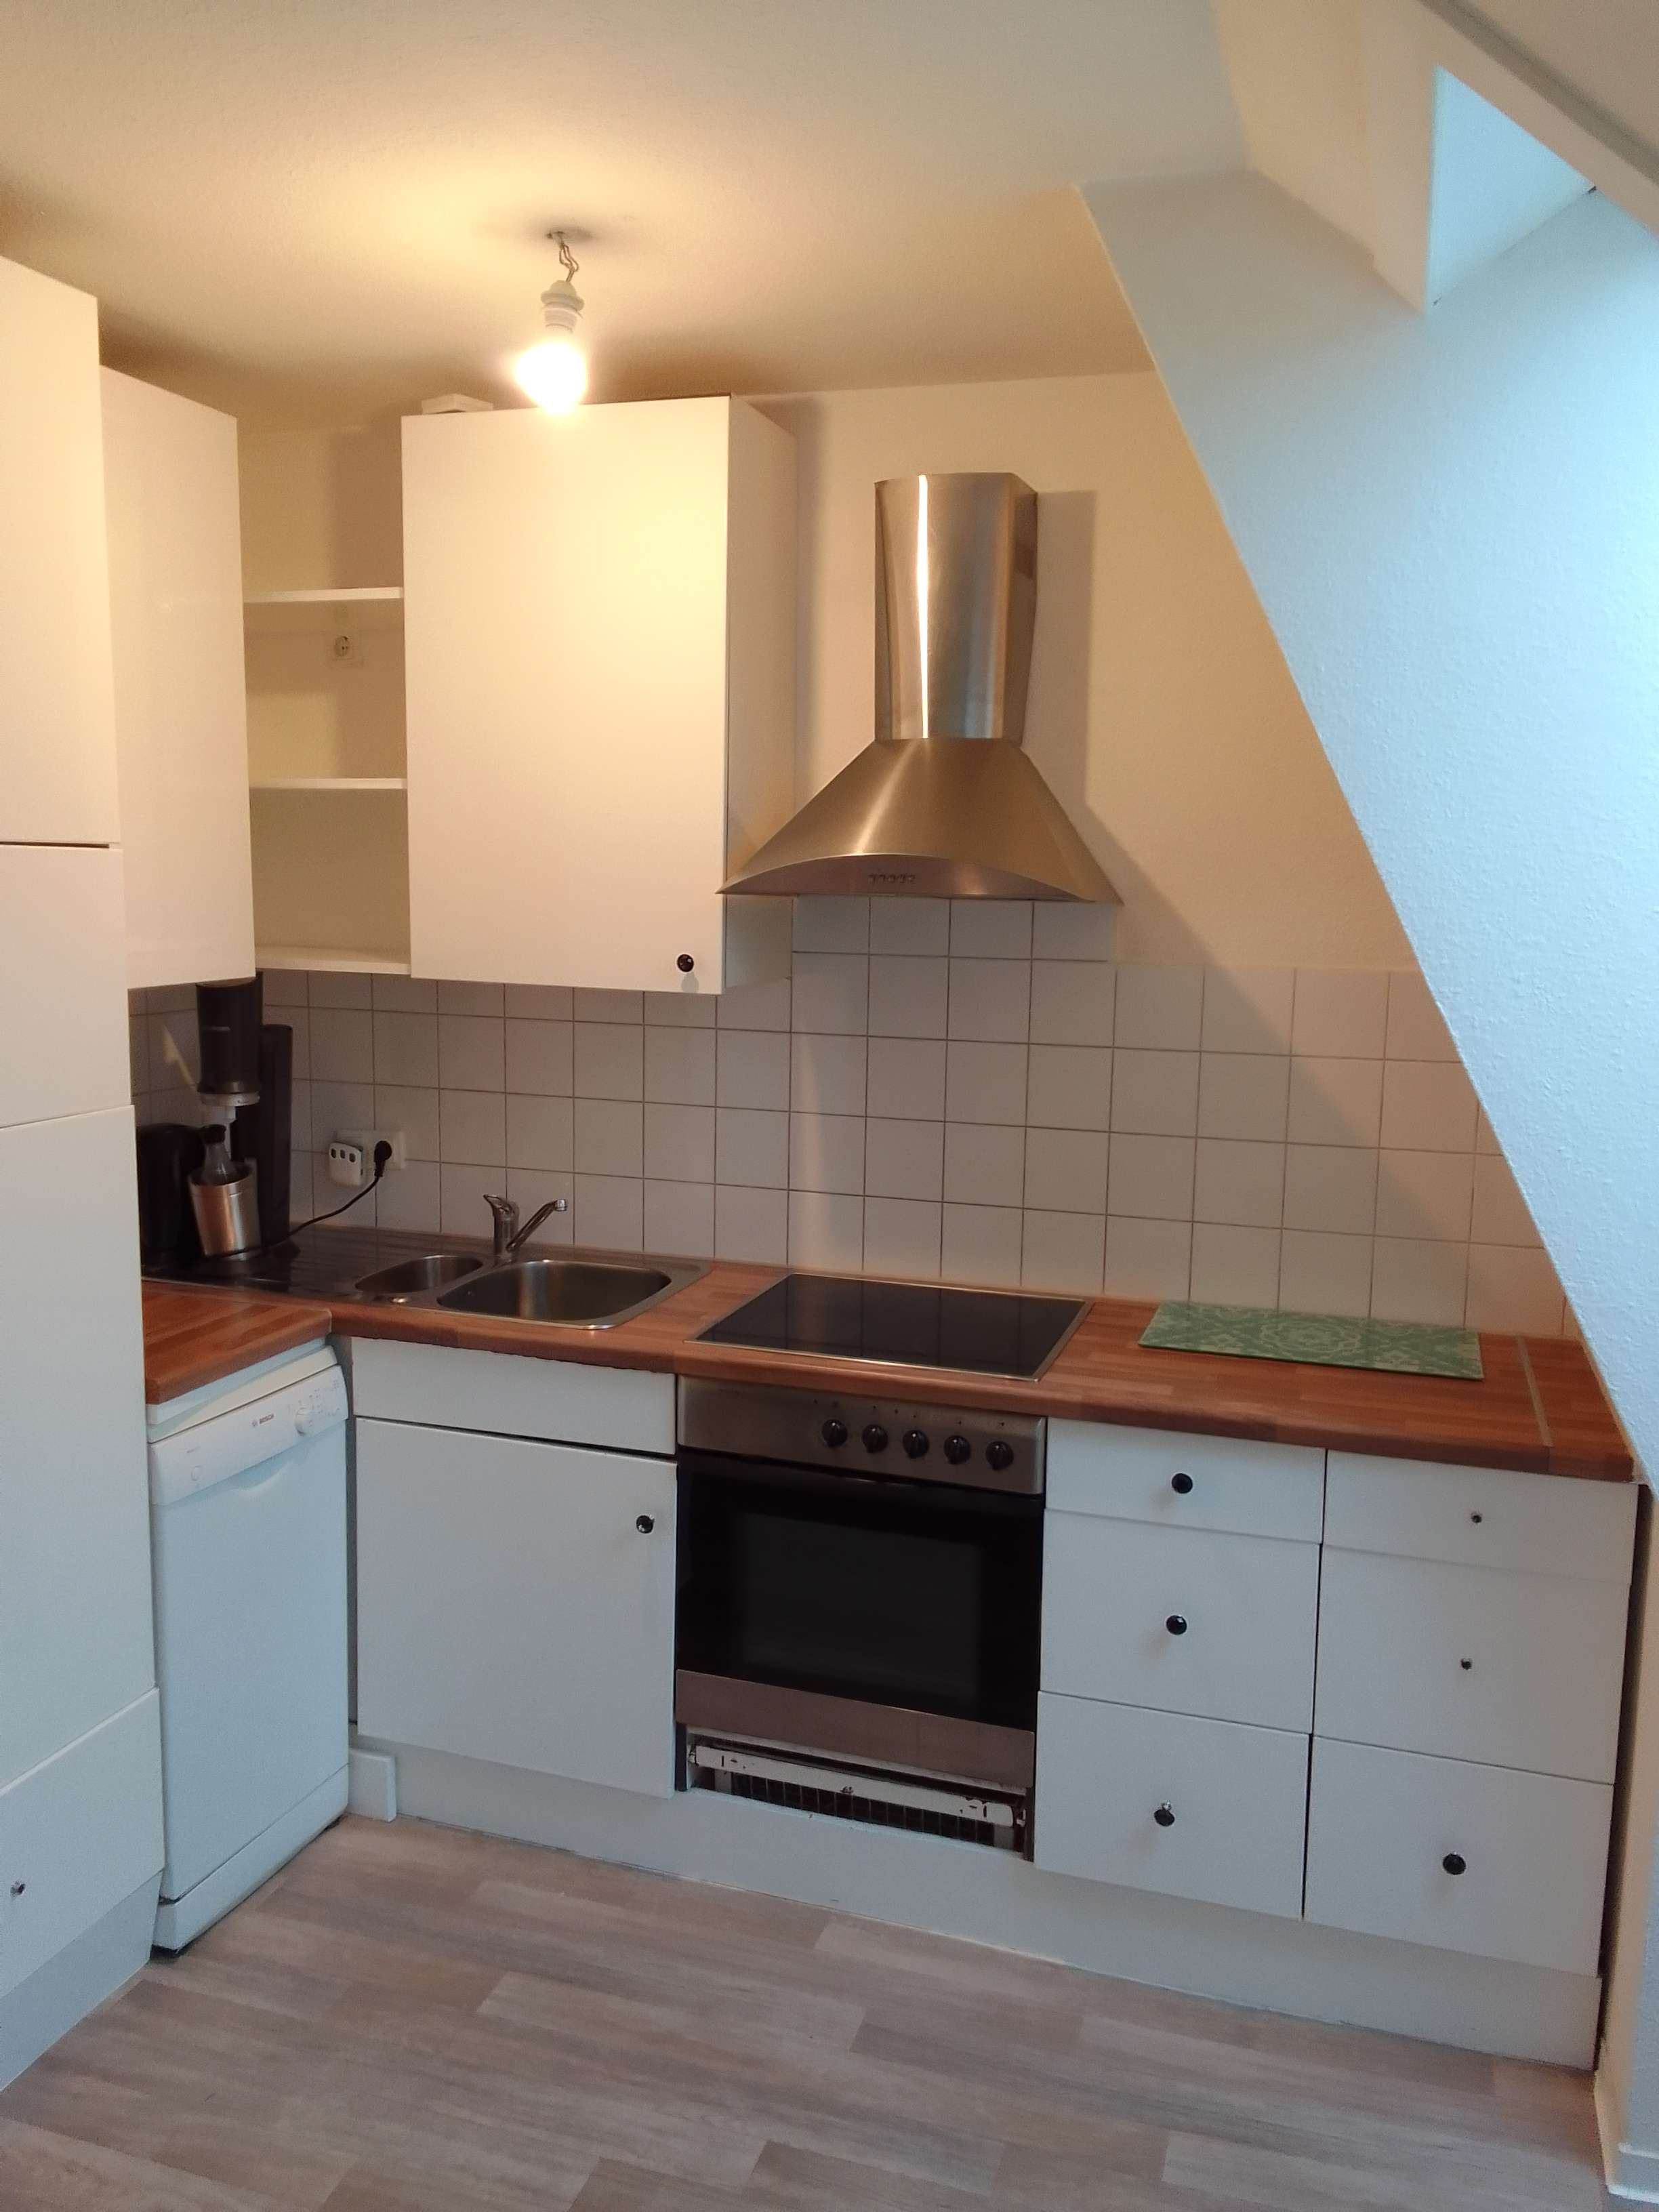 Wohnung zum Mieten in Buxtehude 760,00 € 73 m²